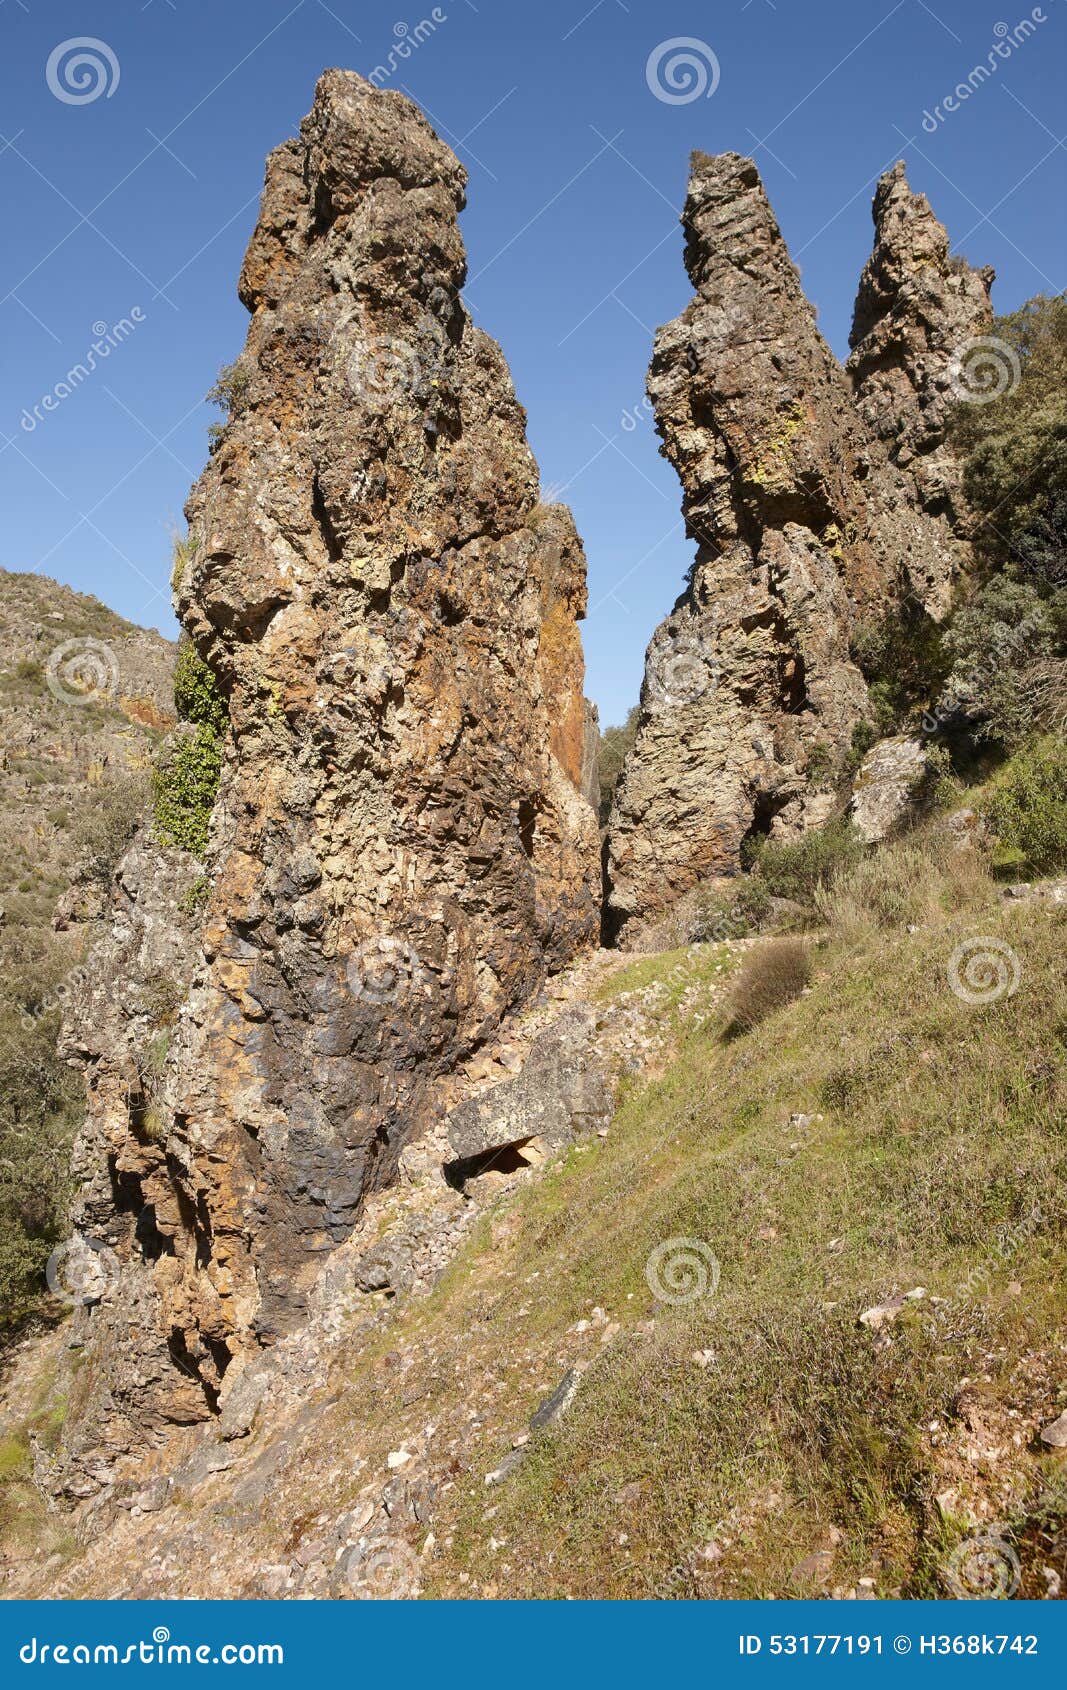 rocky pinnacles landscape in boqueron route. cabaneros, spain